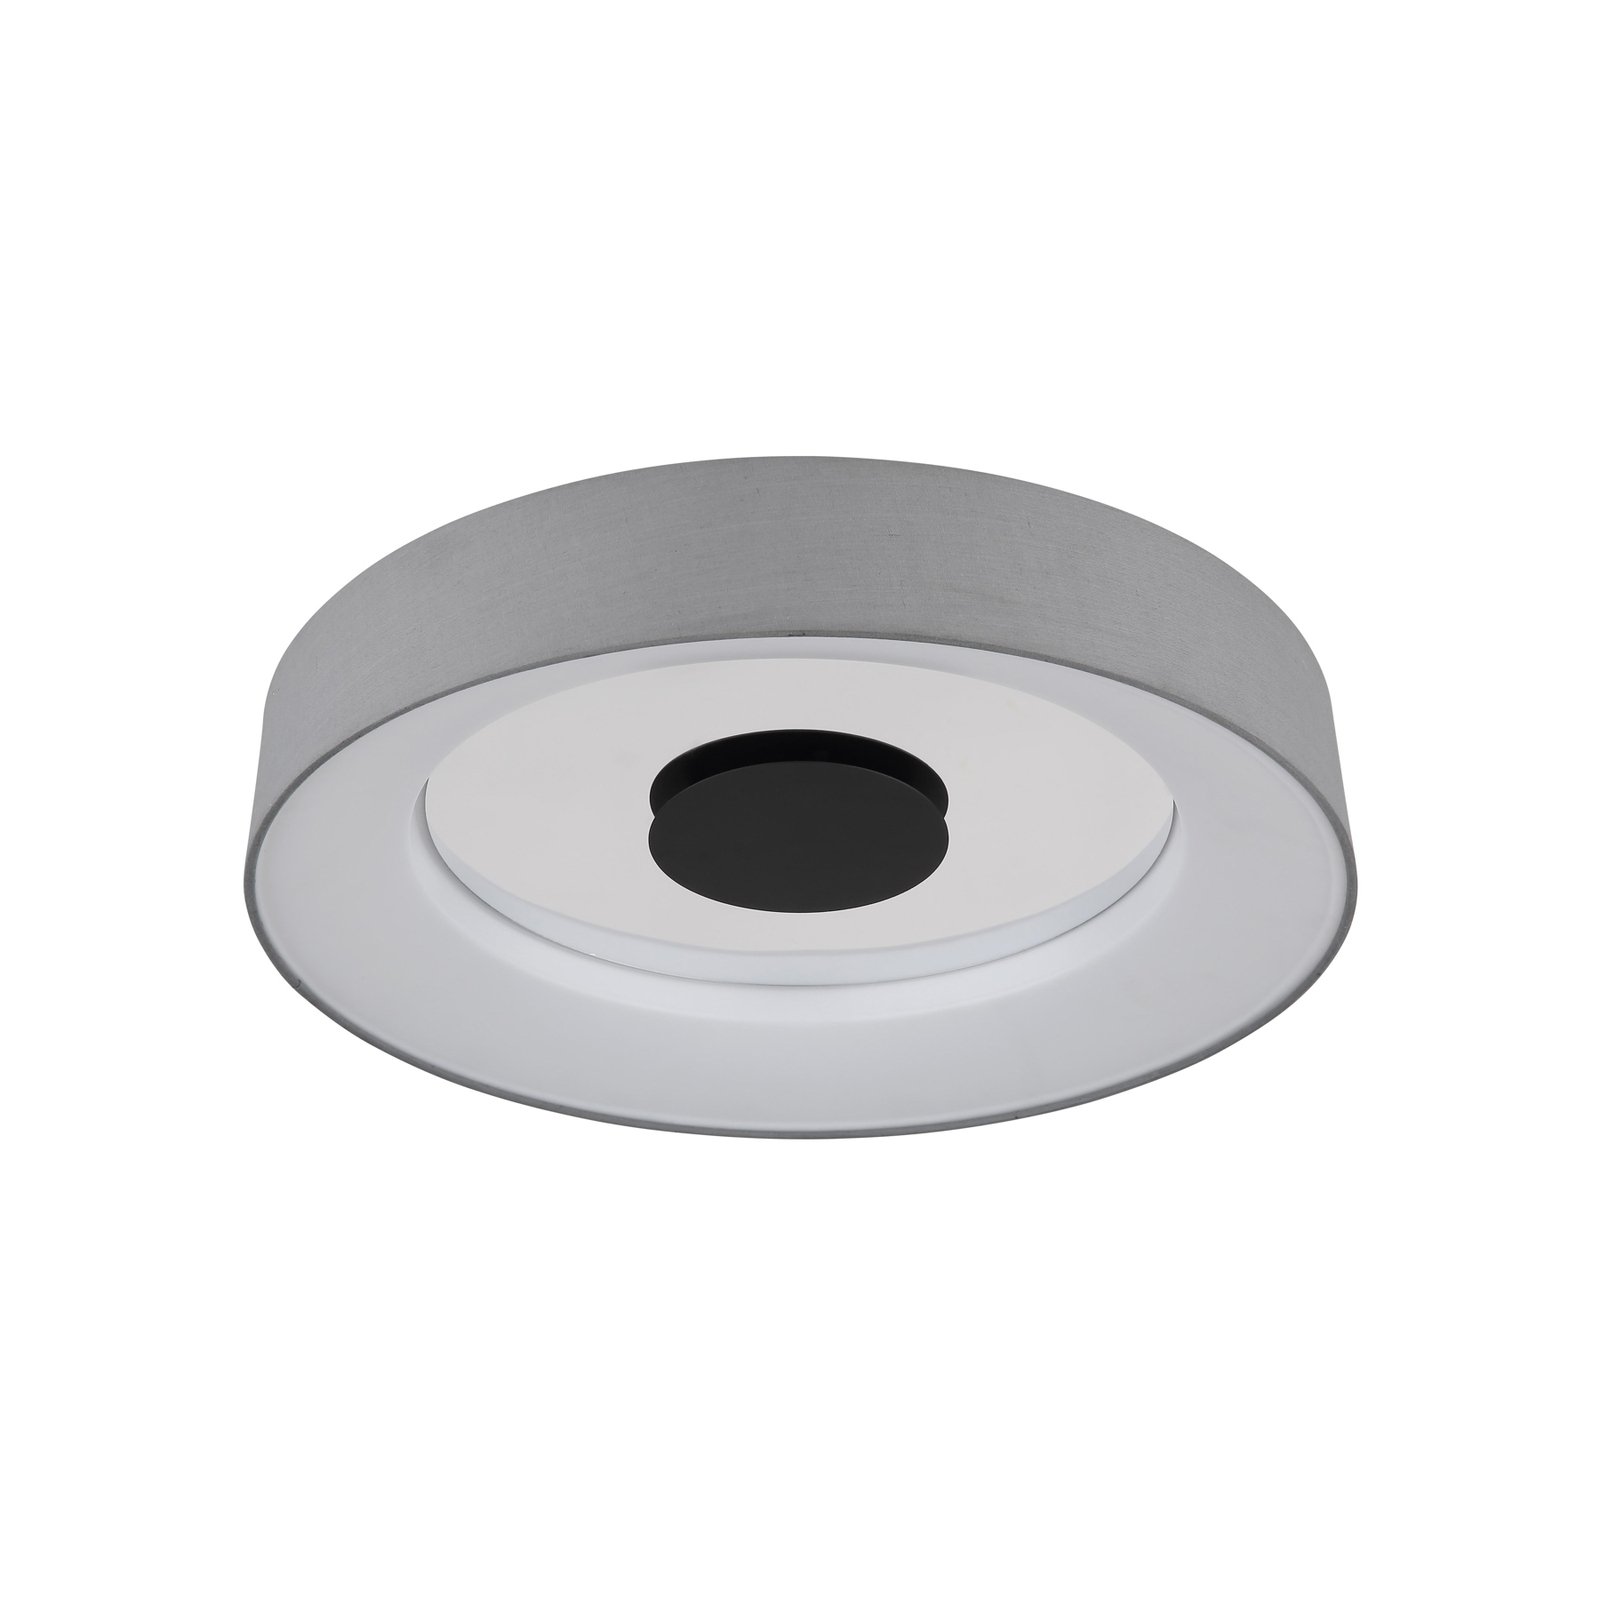 Plafonnier LED Smart Terpsa, blanc/gris, Ø 46,8 cm, tissu